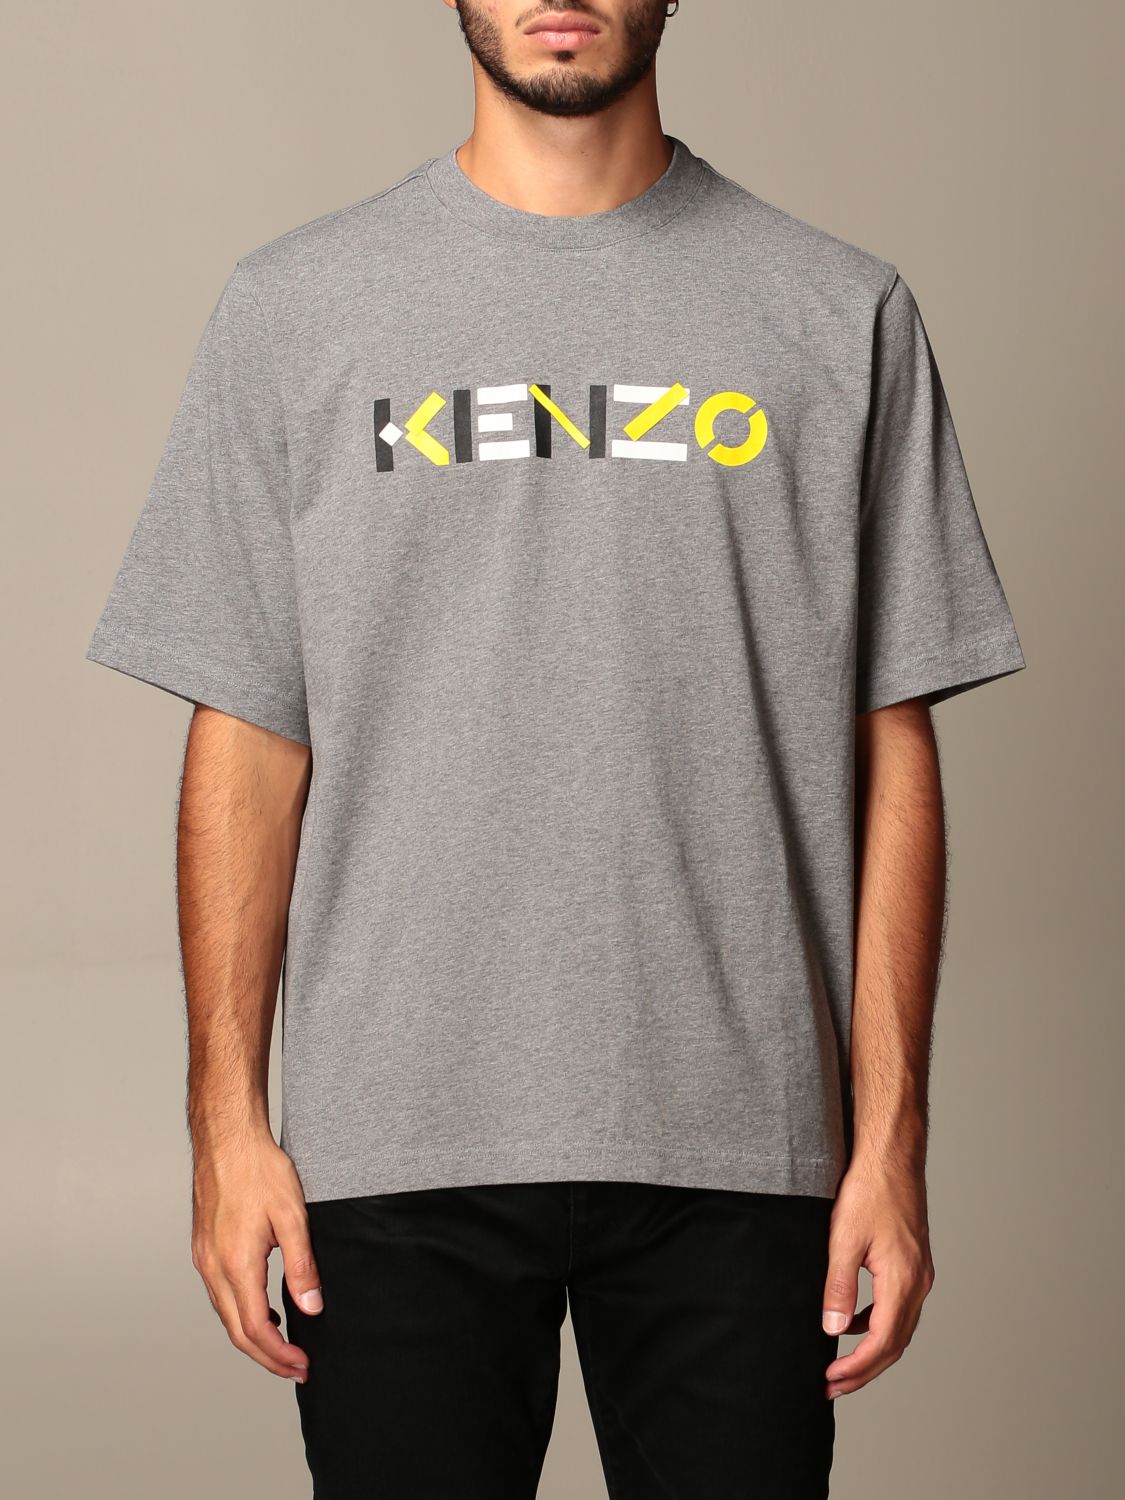 grey kenzo t shirt mens